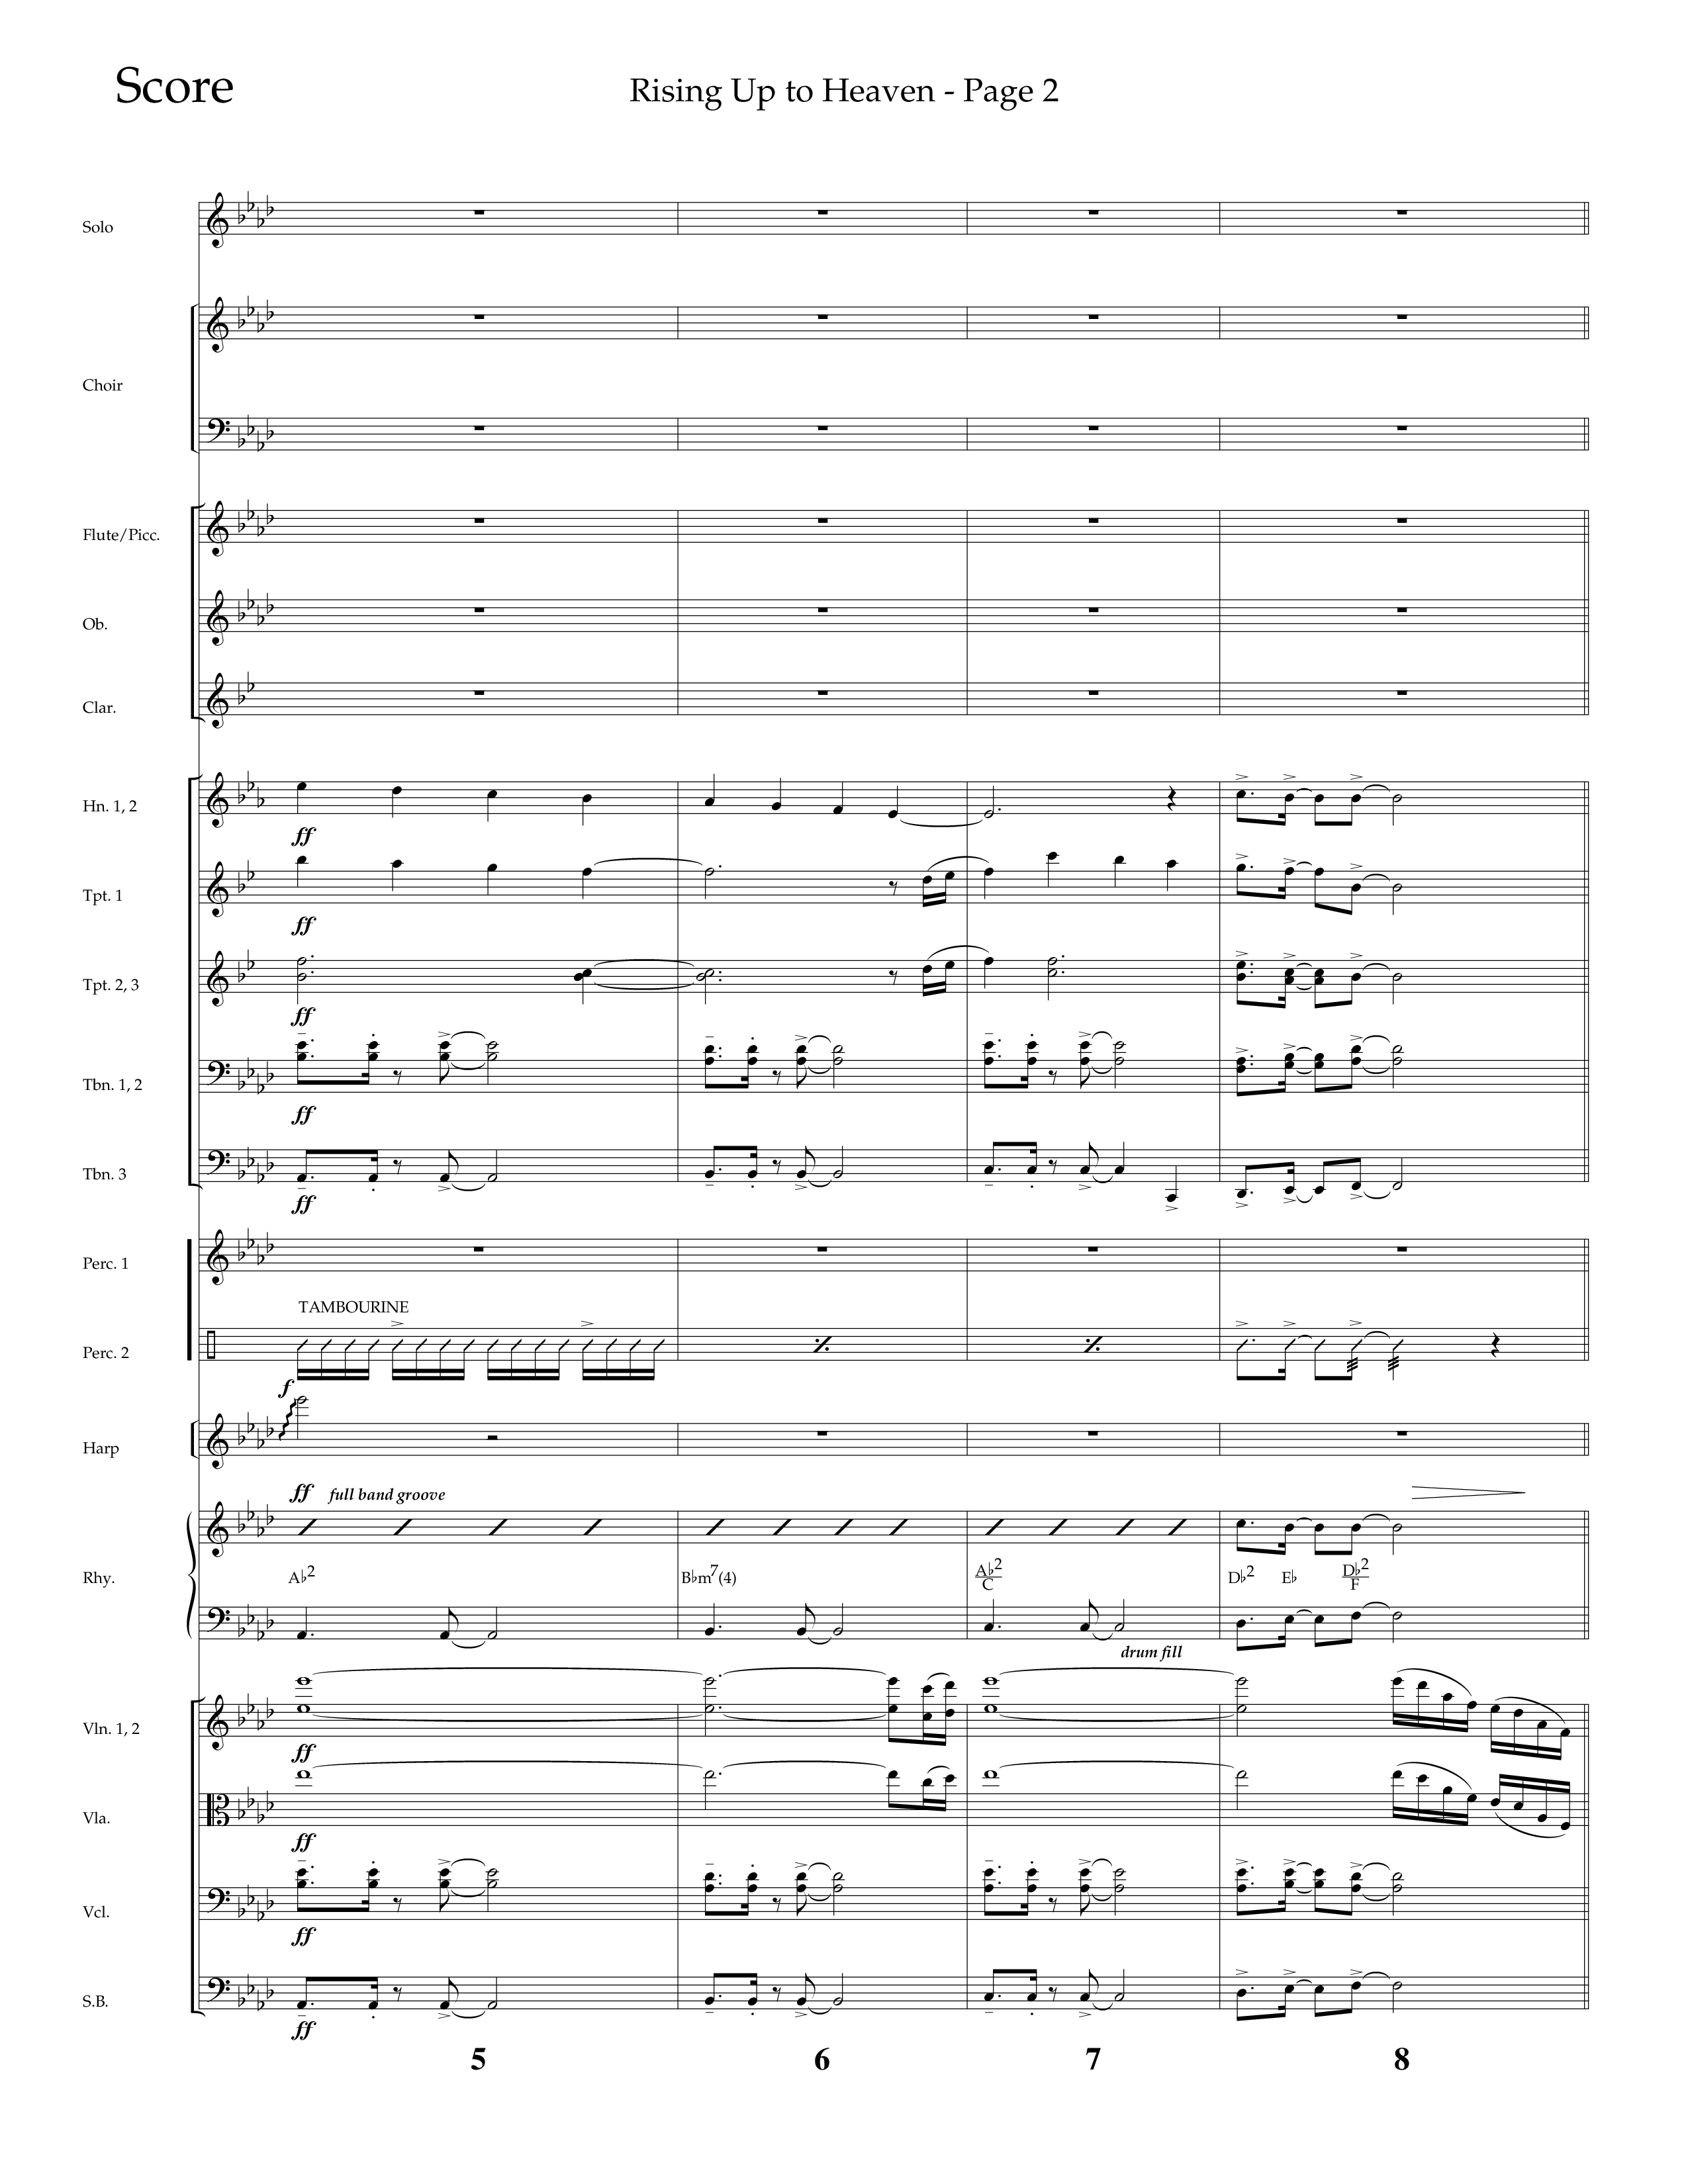 Rising Up To Heaven (Choral Anthem SATB) Conductor's Score (Lifeway Choral / Arr. Craig Adams / Orch. Danny Zaloudik)